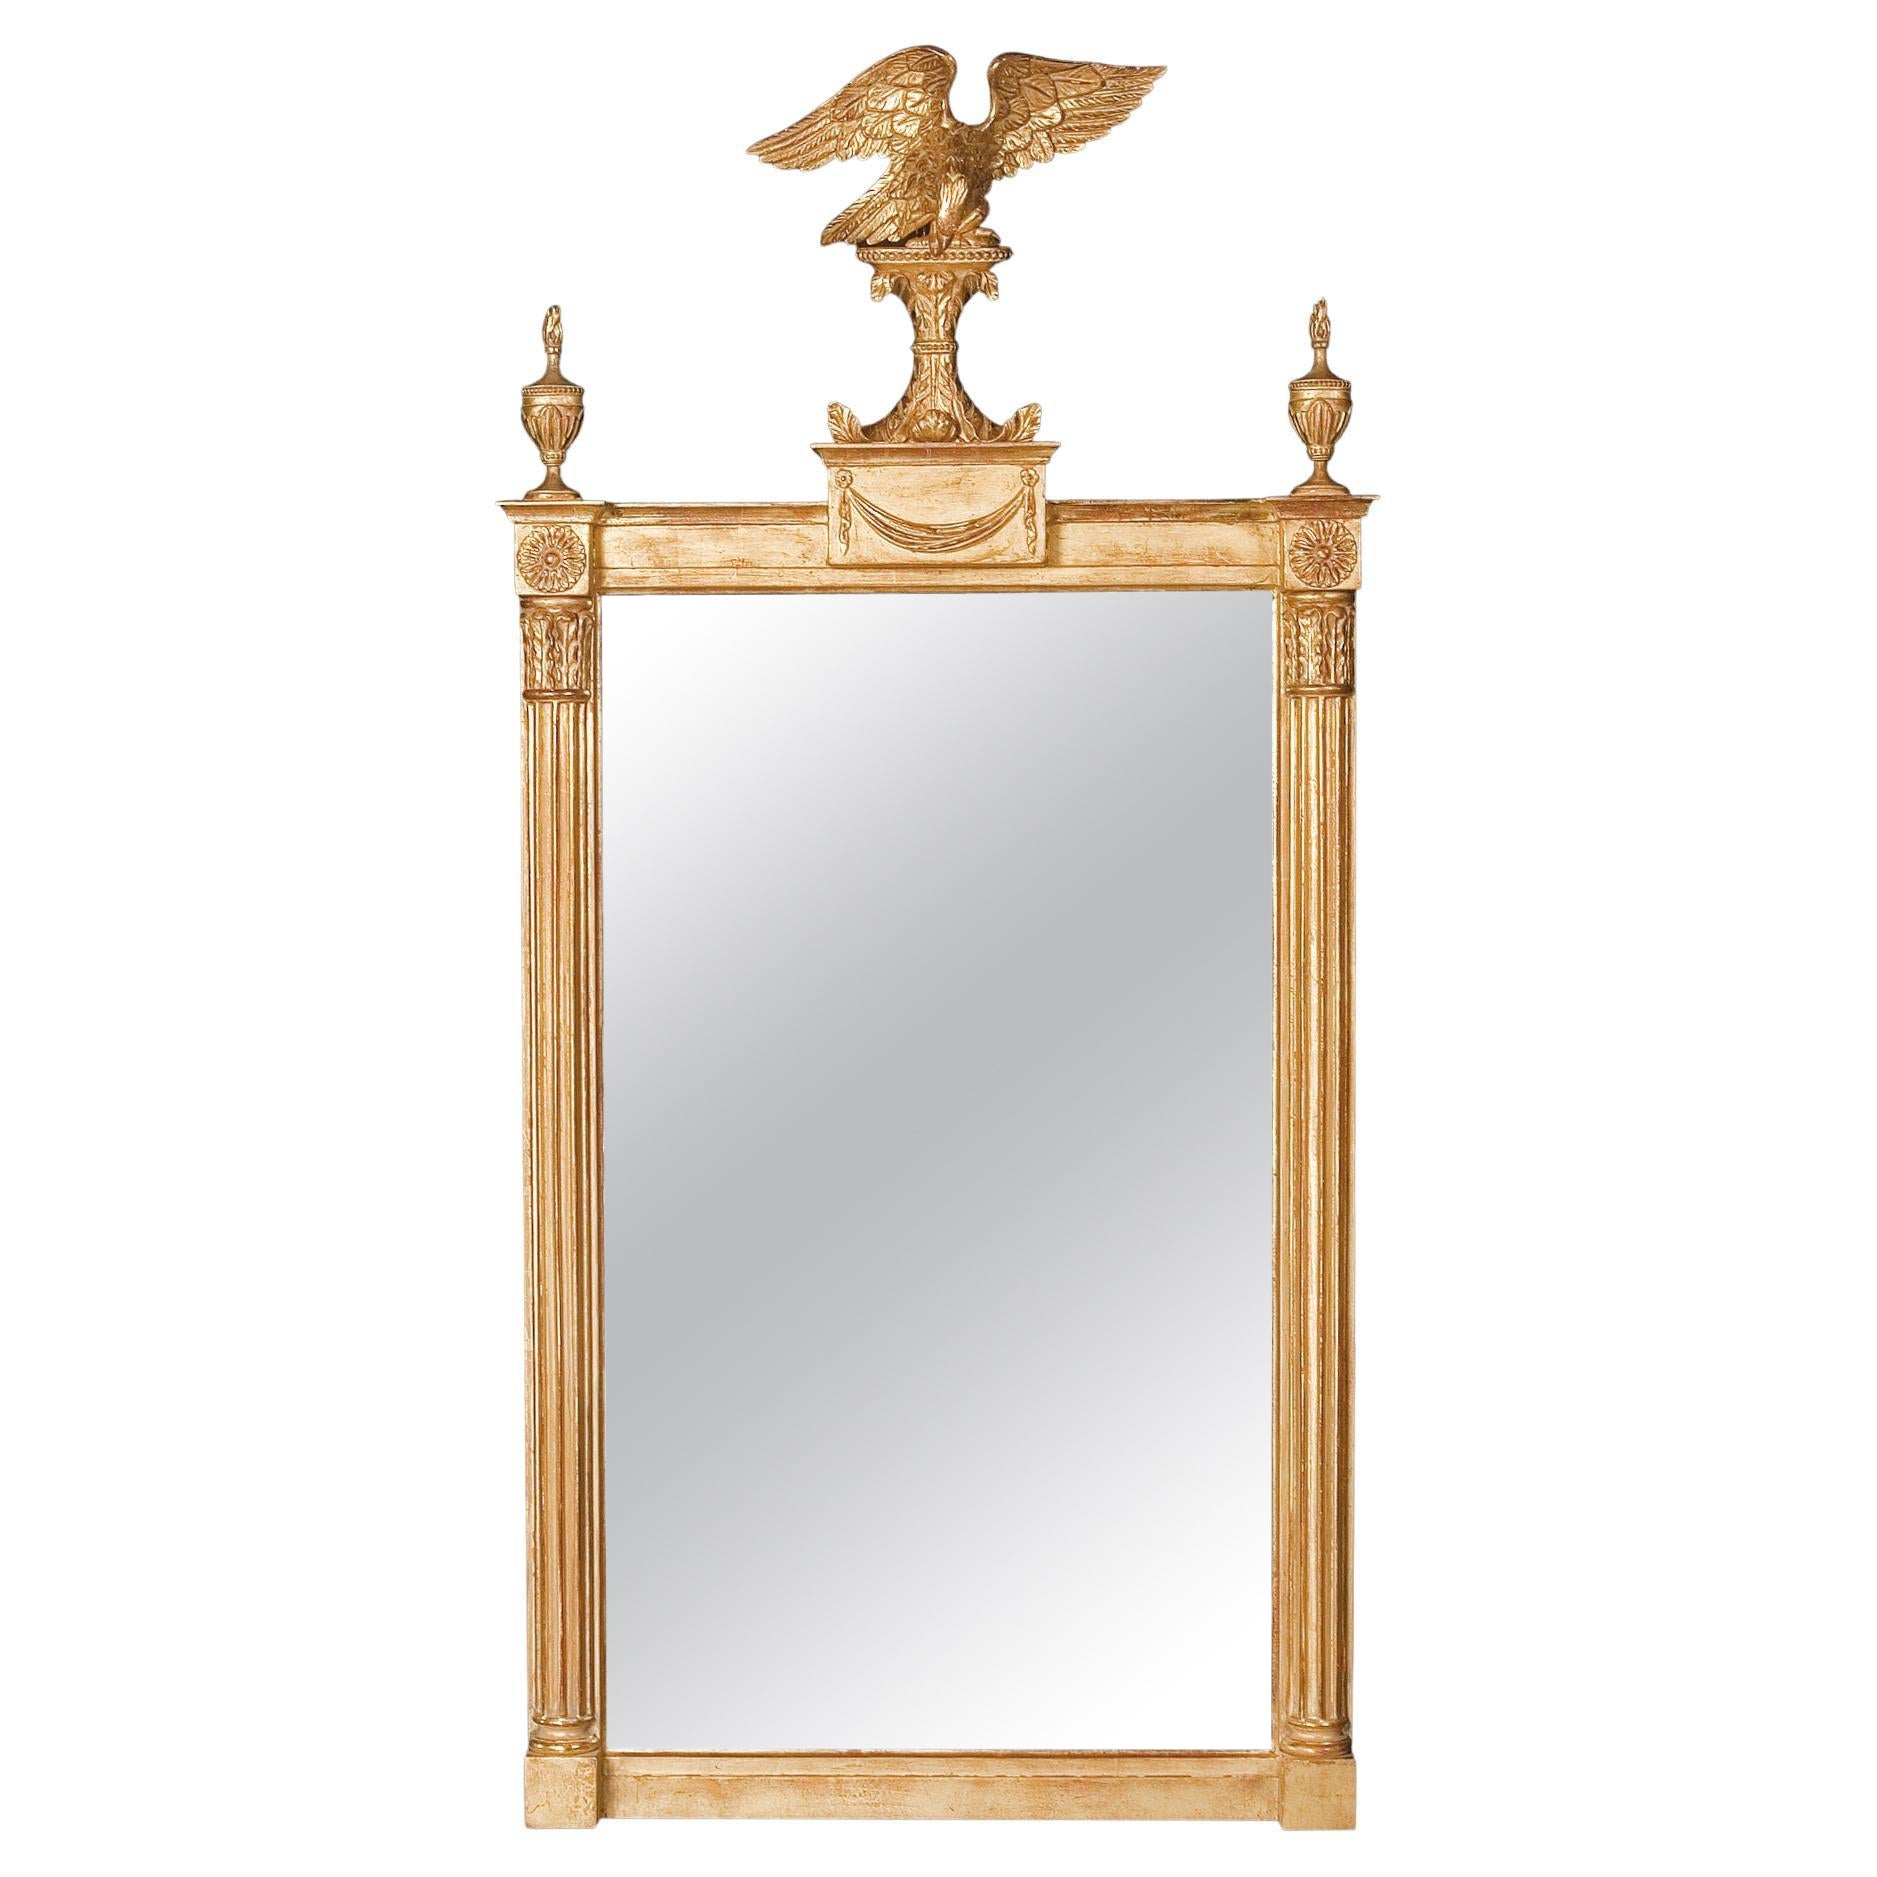 Regency Eagle Pier Mirror